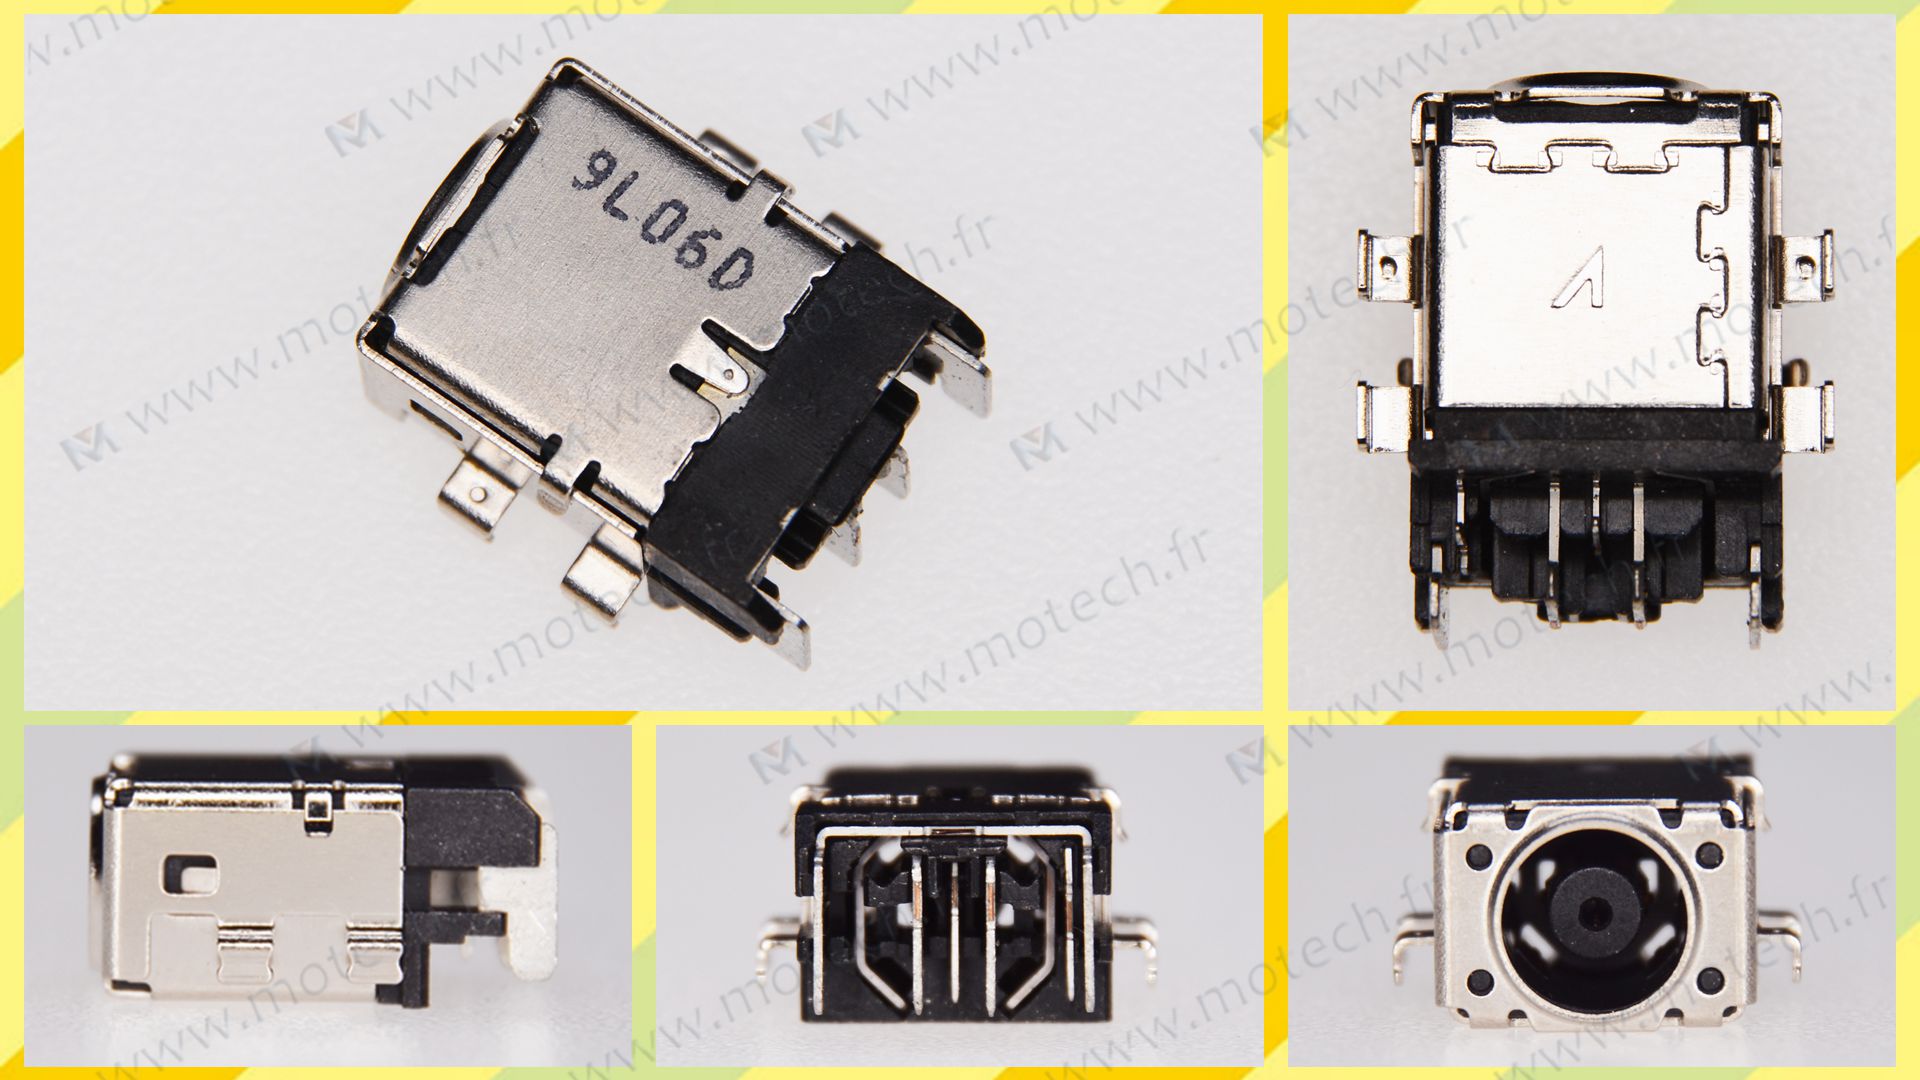 Asus G531G charging connector, Asus G531G DC Power Jack, Asus G531G Power Jack, Asus G531G plug, Asus G531G Jack socket, Asus G531G connecteur de charge, 